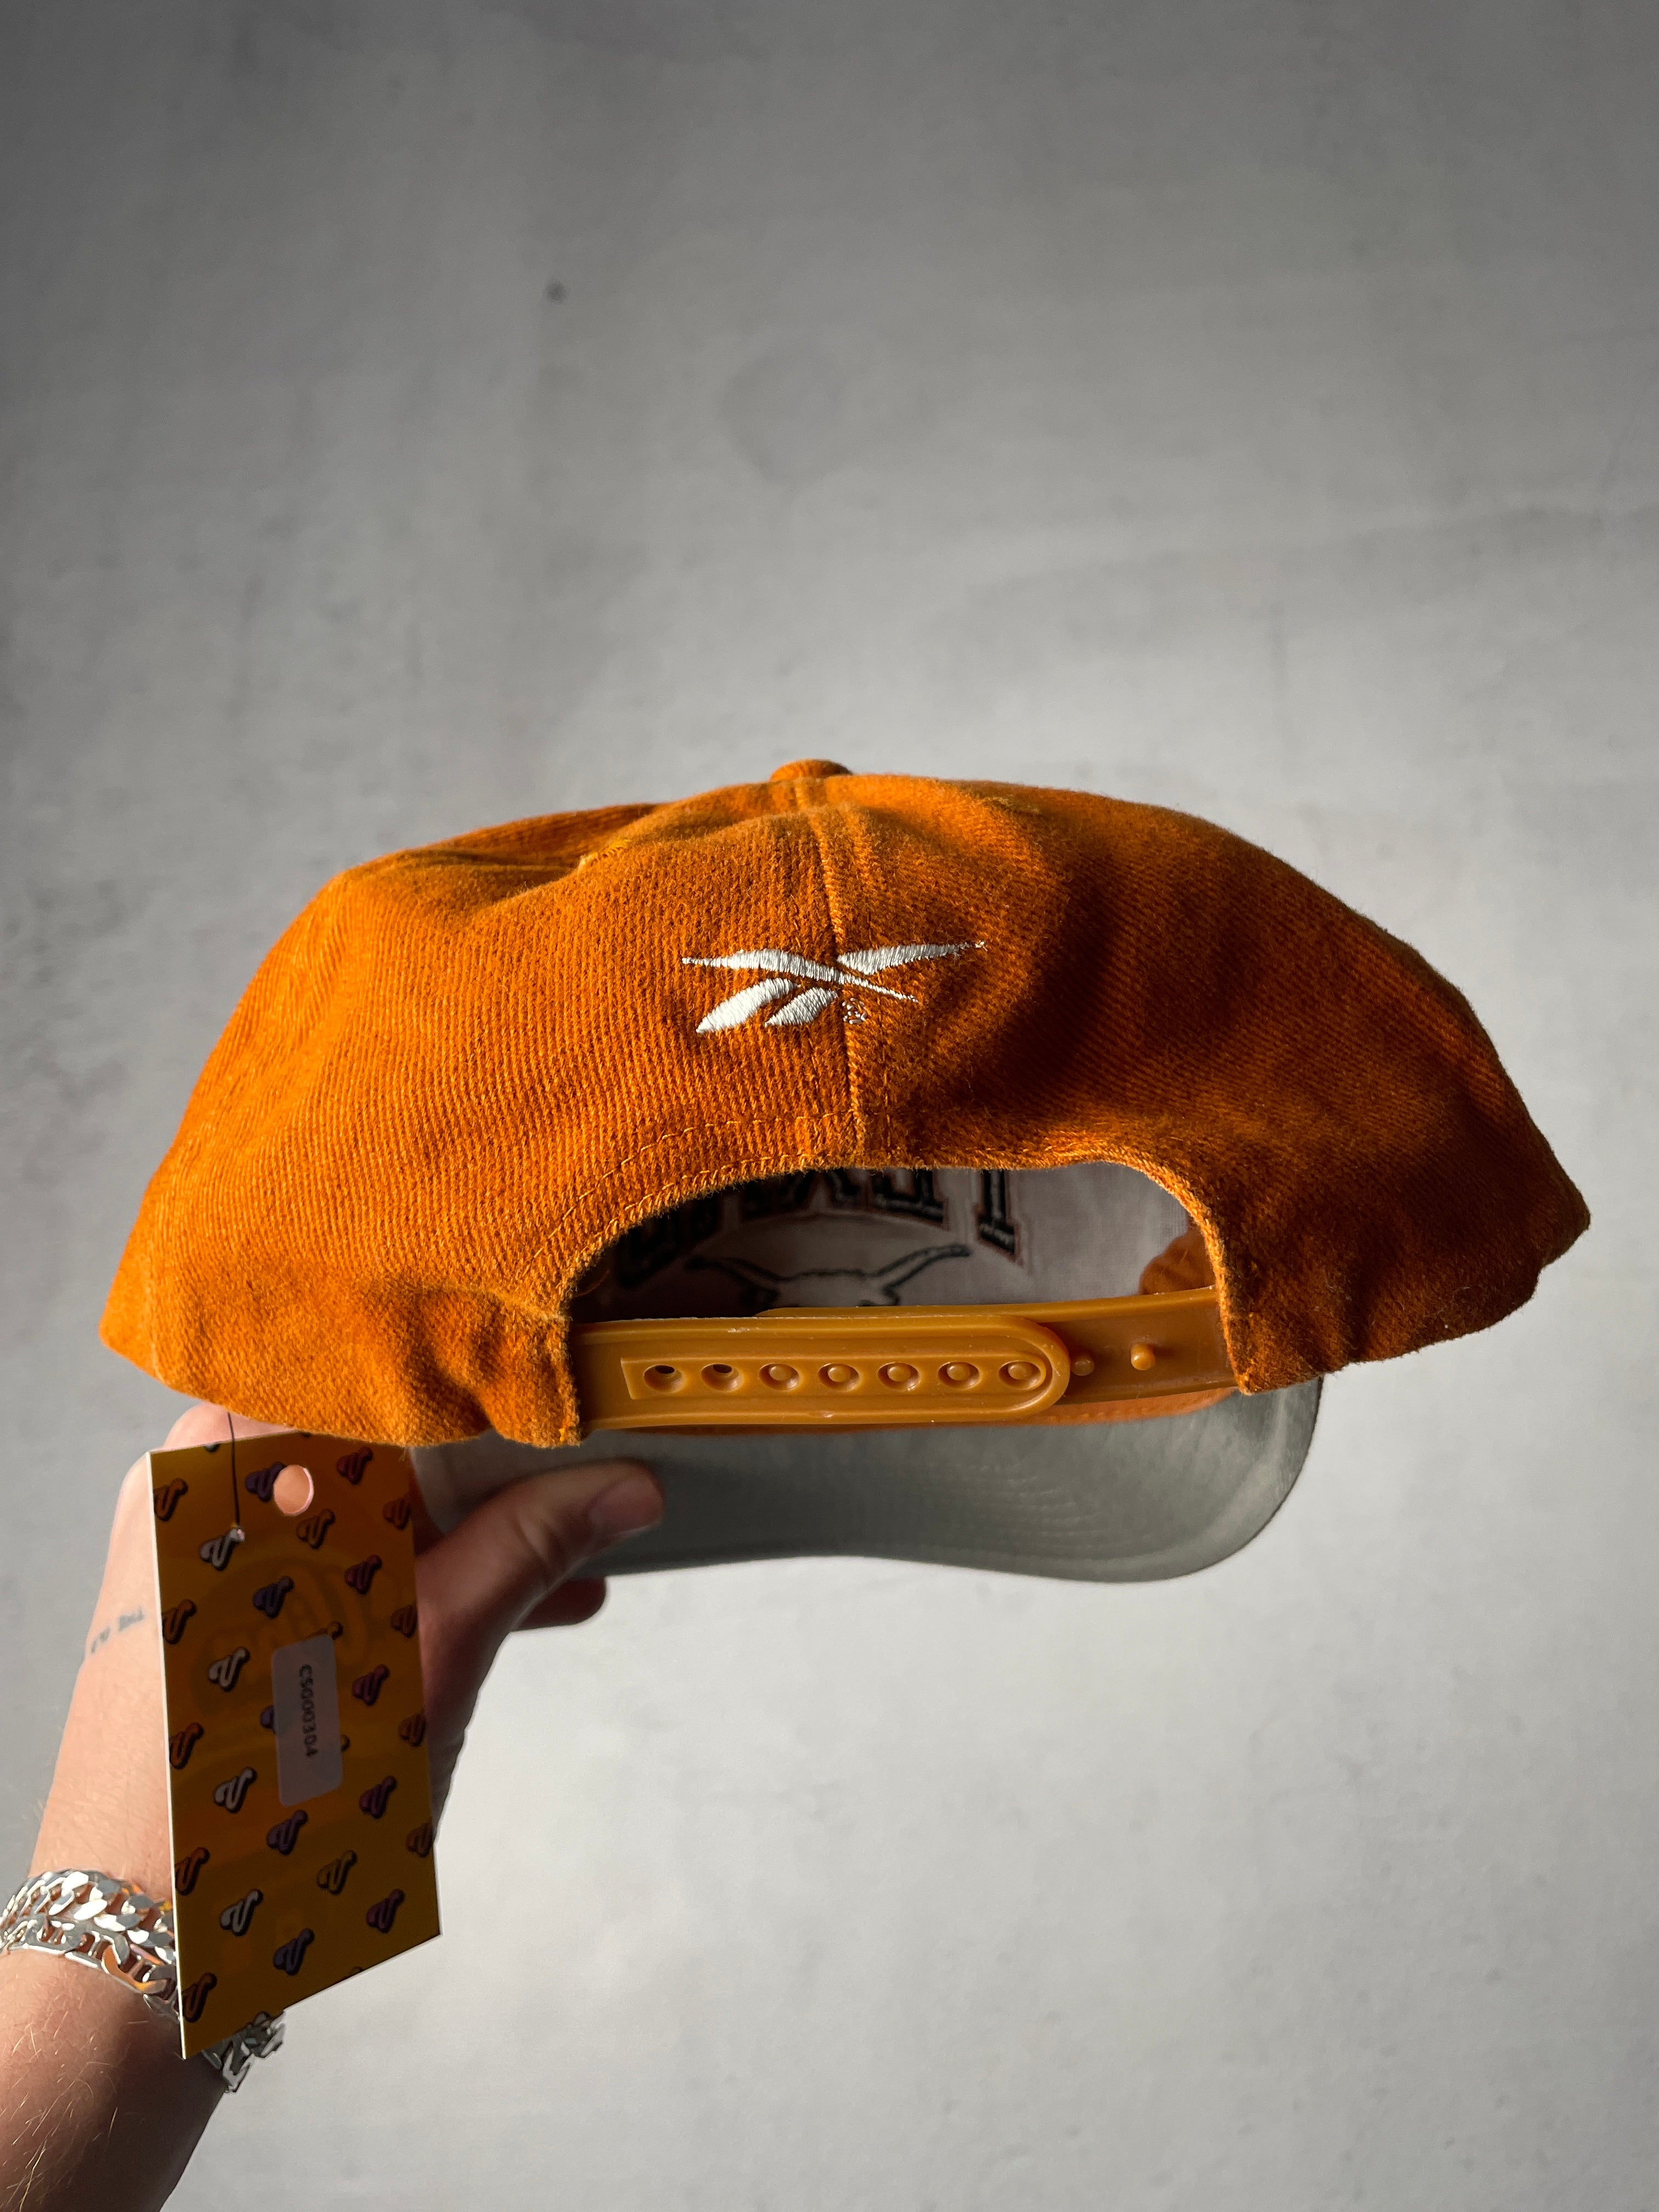 Vintage NCAA Texas Long Horns Snap-Back Hat - Adjustable